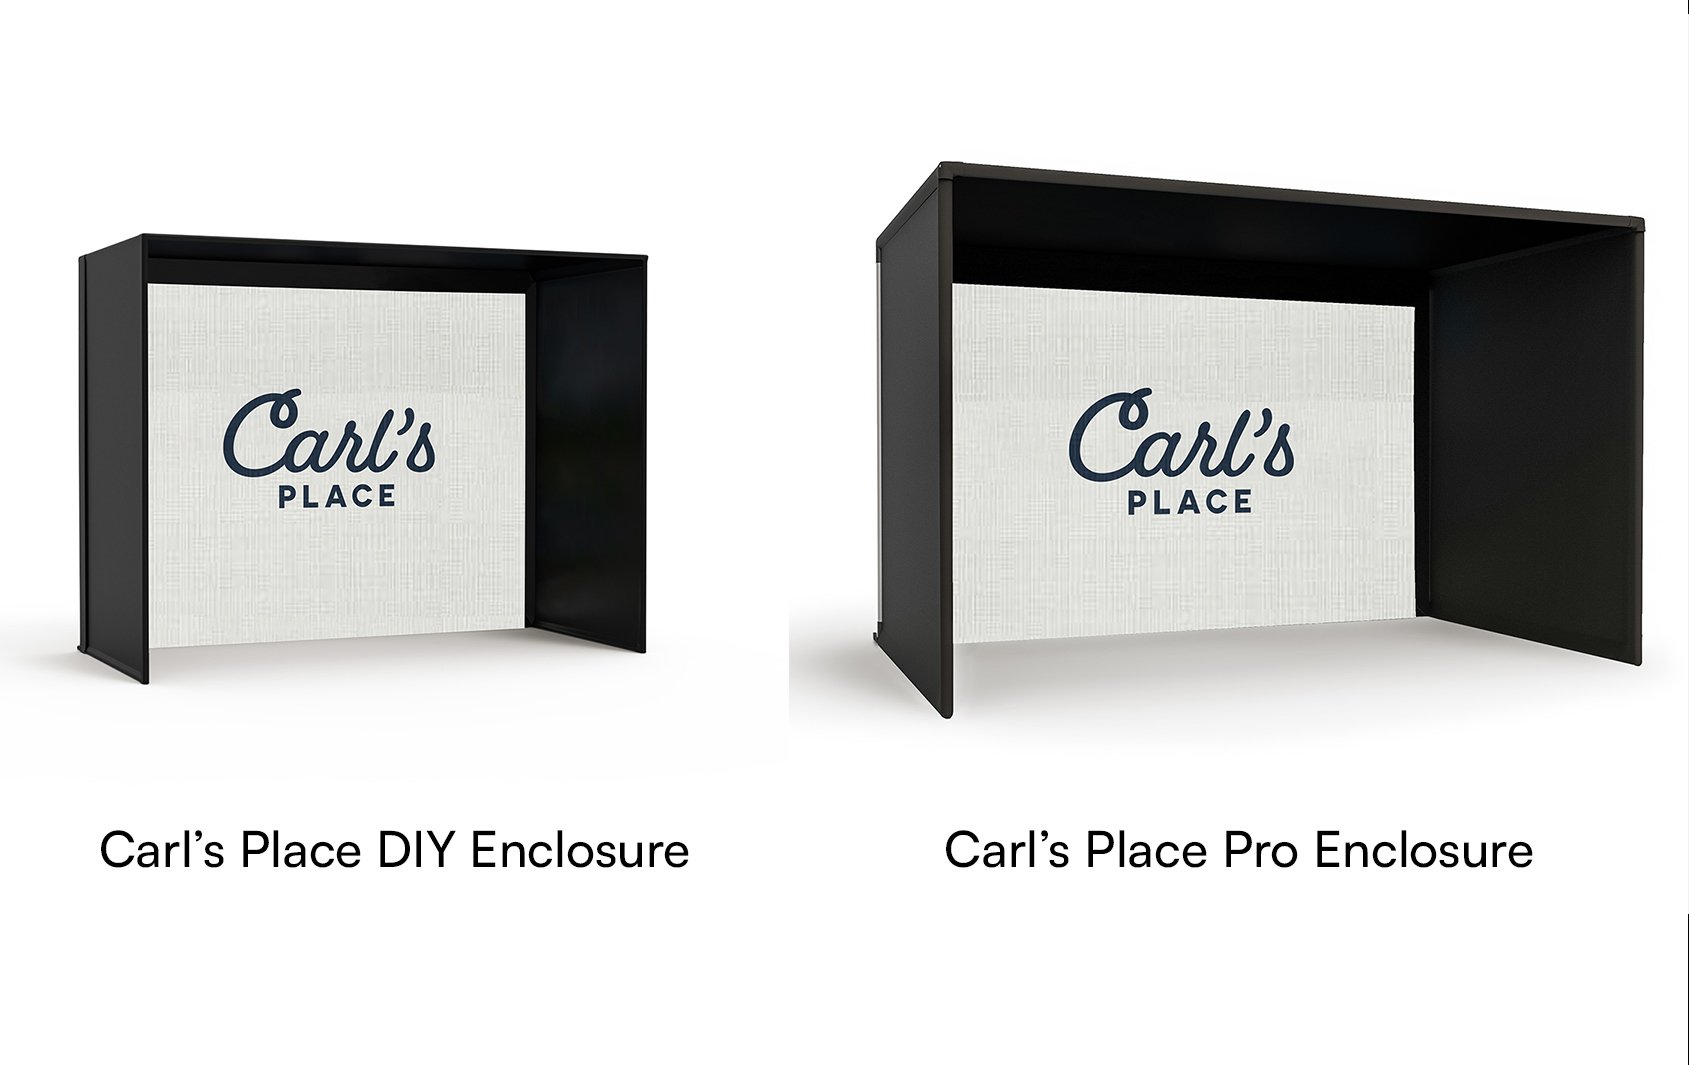 Carl's Place DIY vs. Pro Enclosure